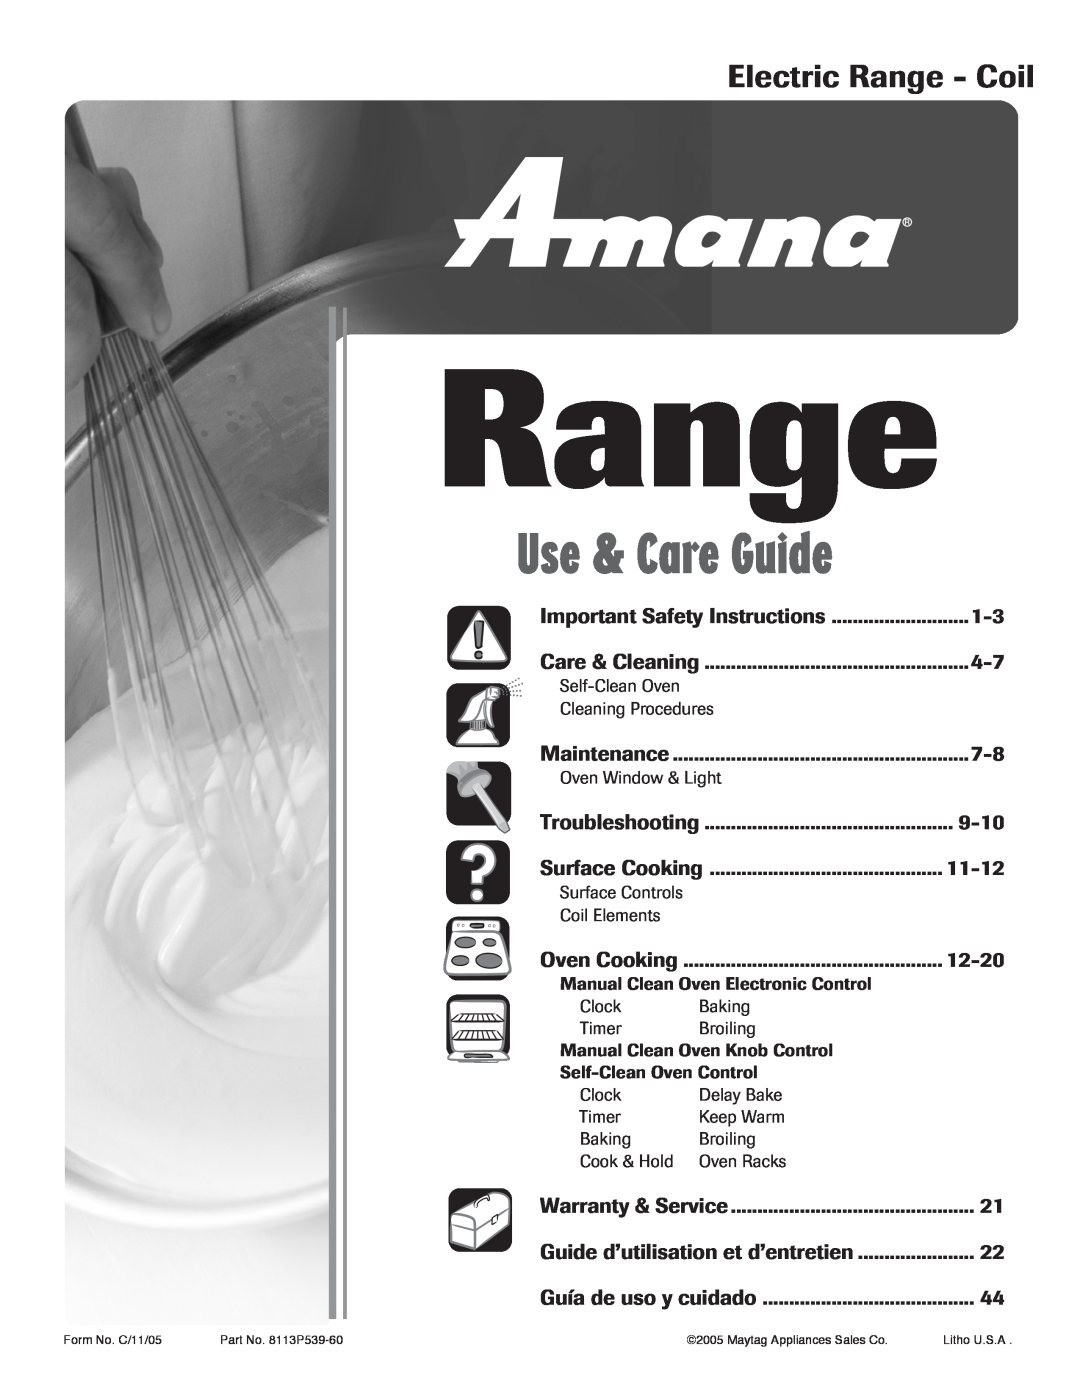 Amana Electric Range - Coil manual Use & Care Guide 